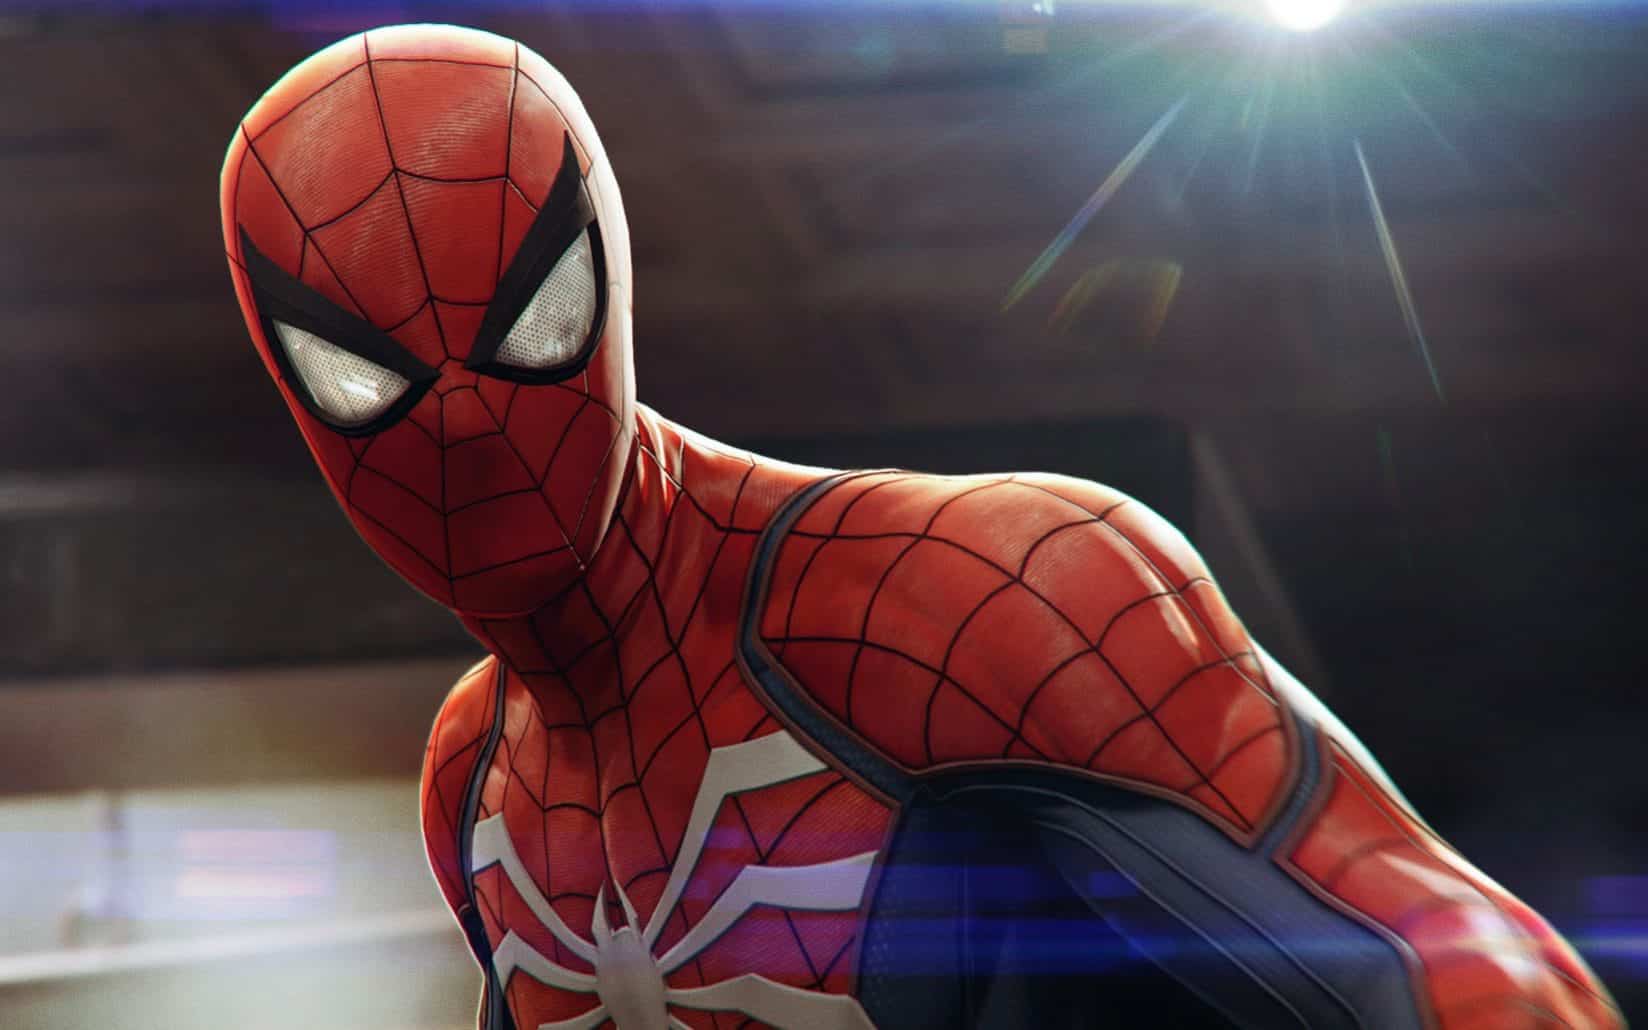 Spider-Man PS4 New Screenshots and Concept Art - 1648 x 1030 jpeg 143kB